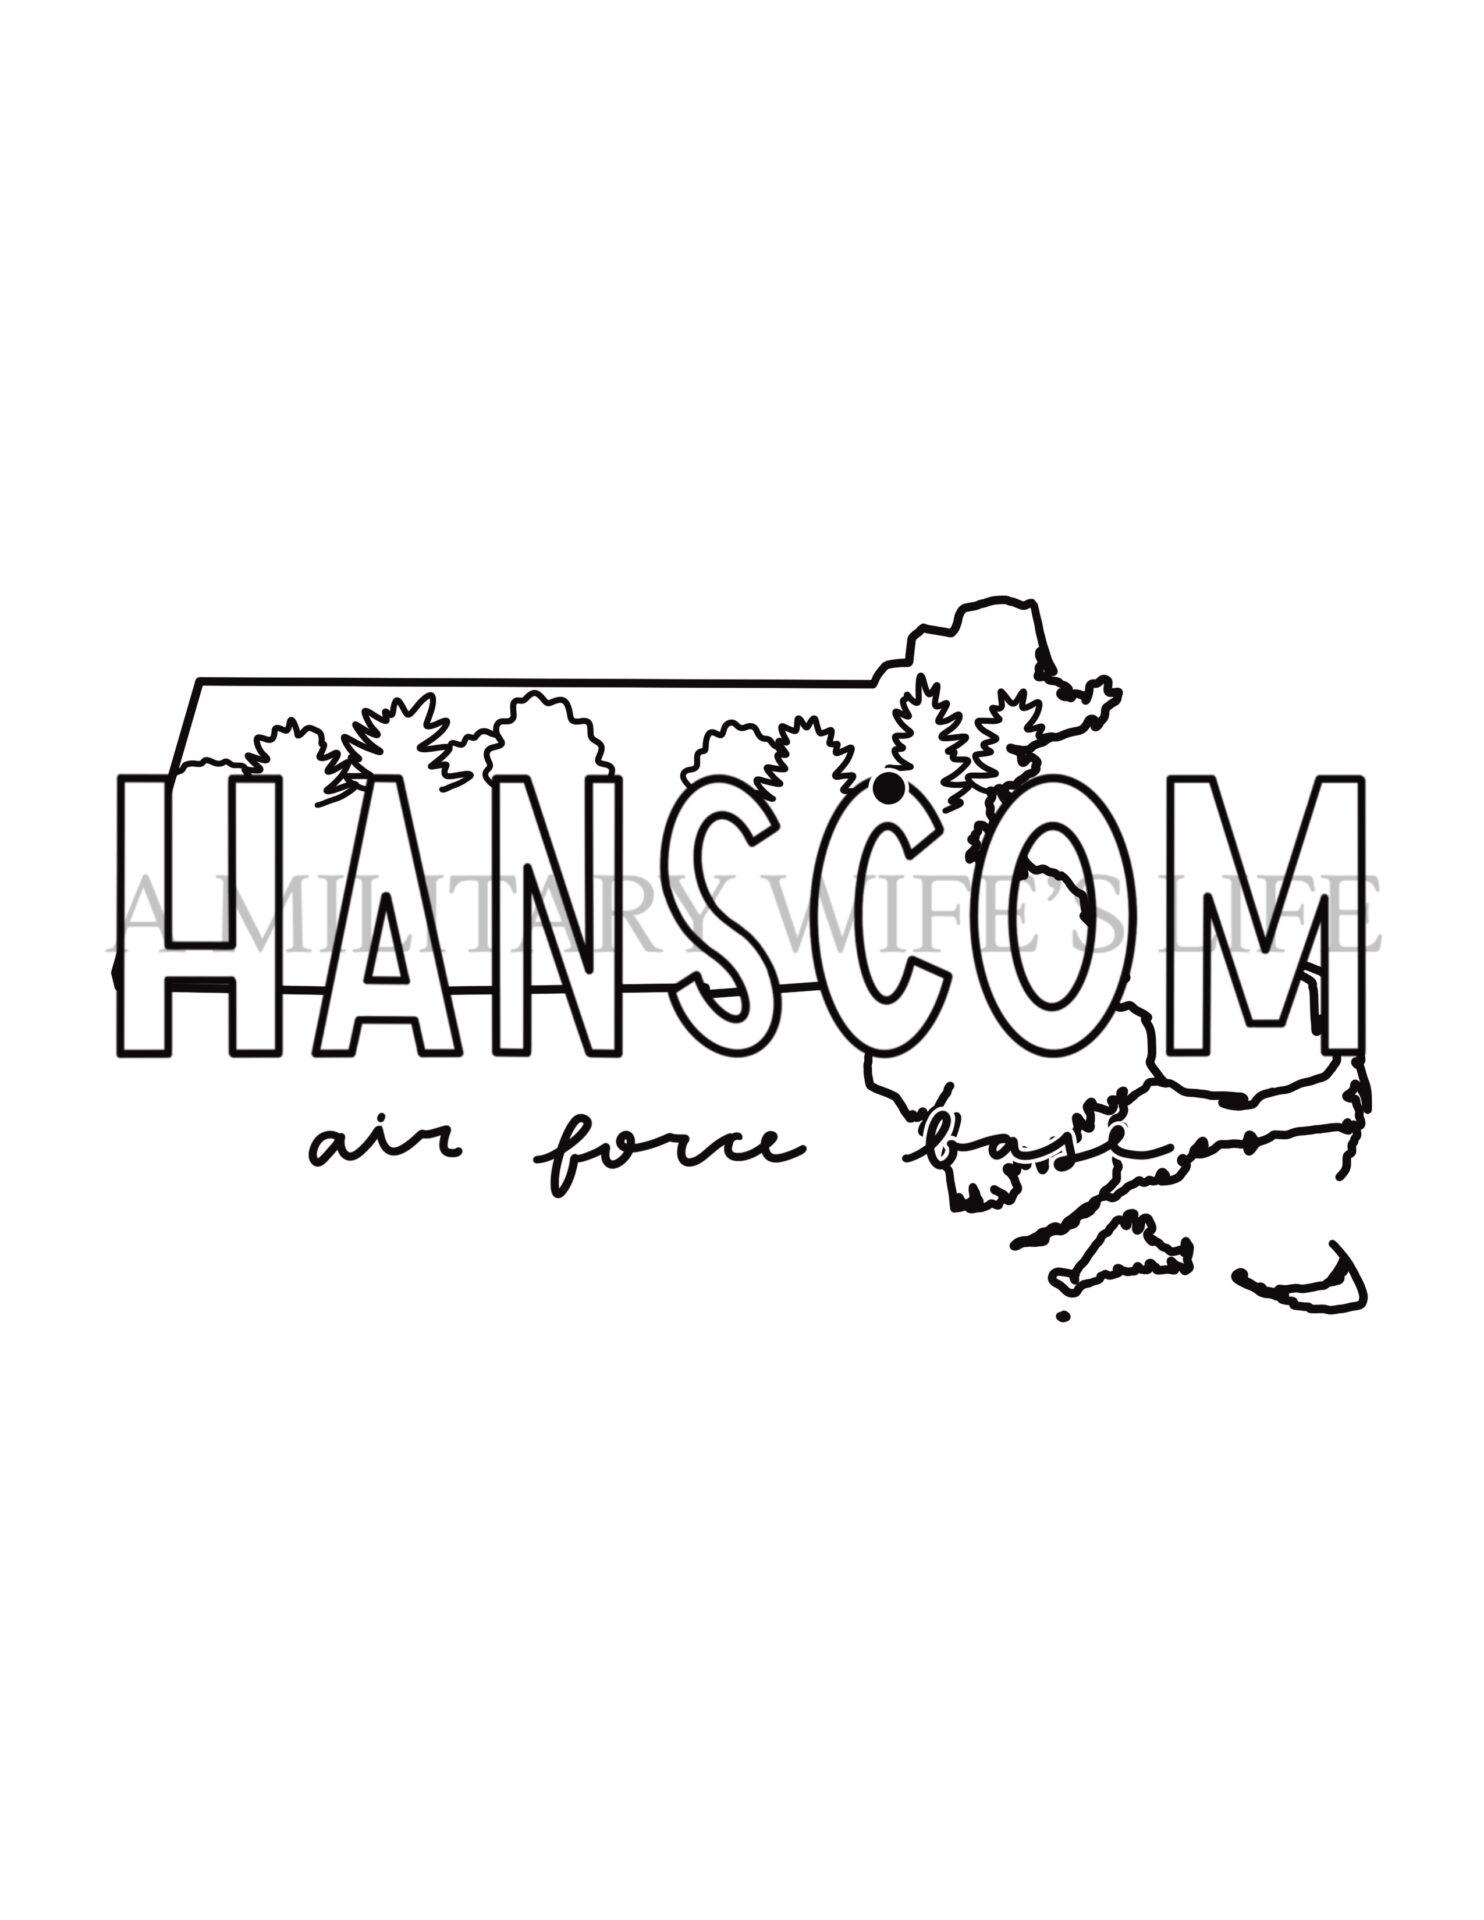 Hanscom-afb